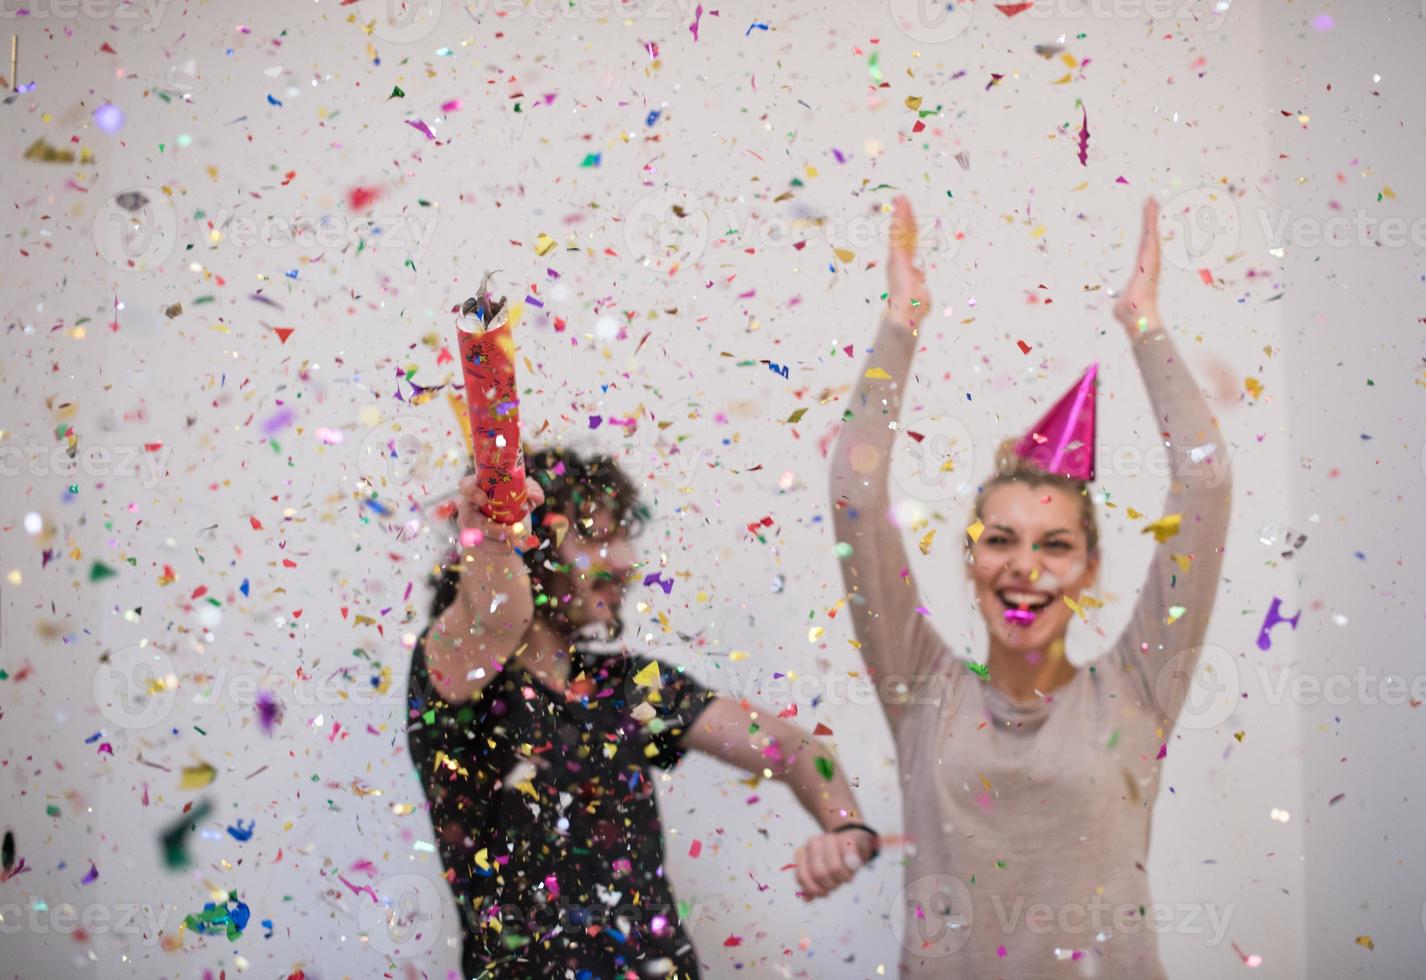 pareja joven romántica celebrando la fiesta con confetti foto